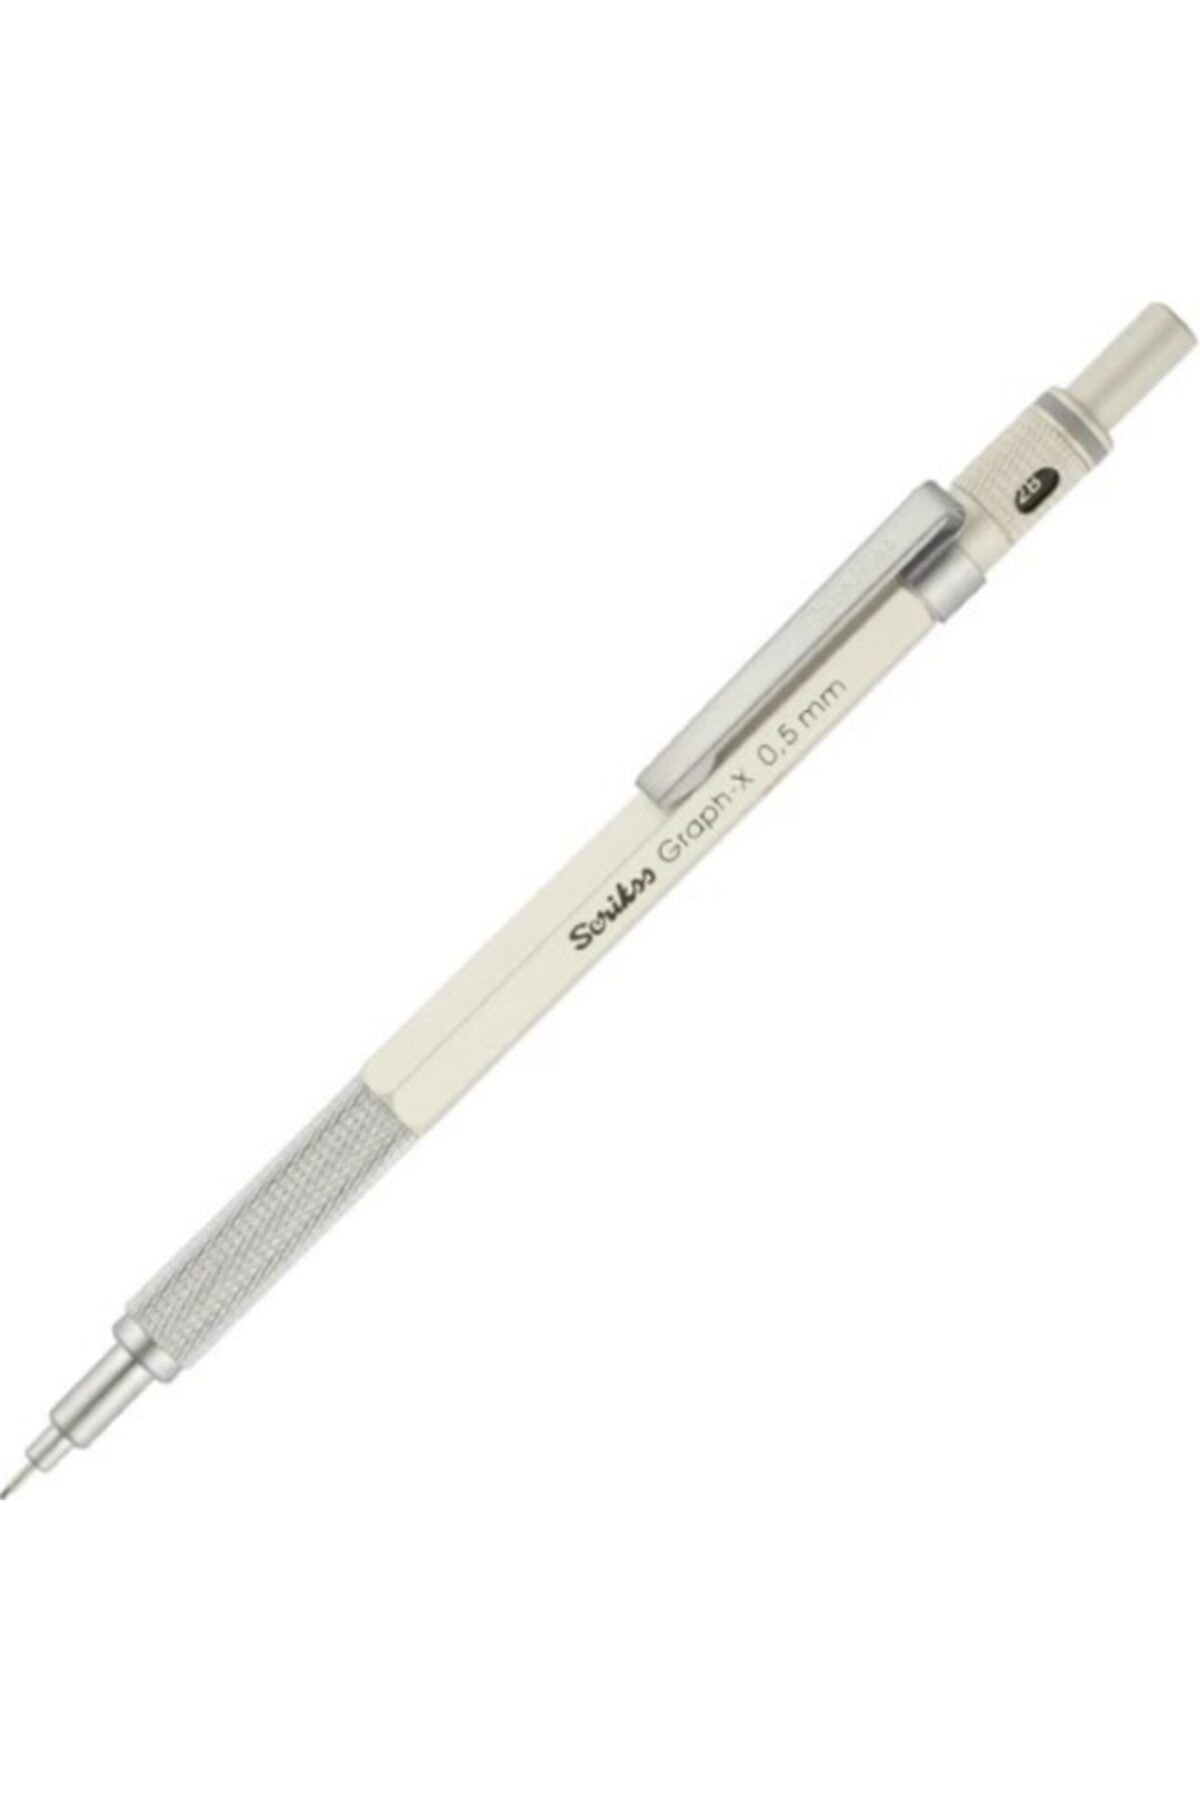 Scrikss Versatil Kalem Metal Graph-x 0.5mm Beyaz